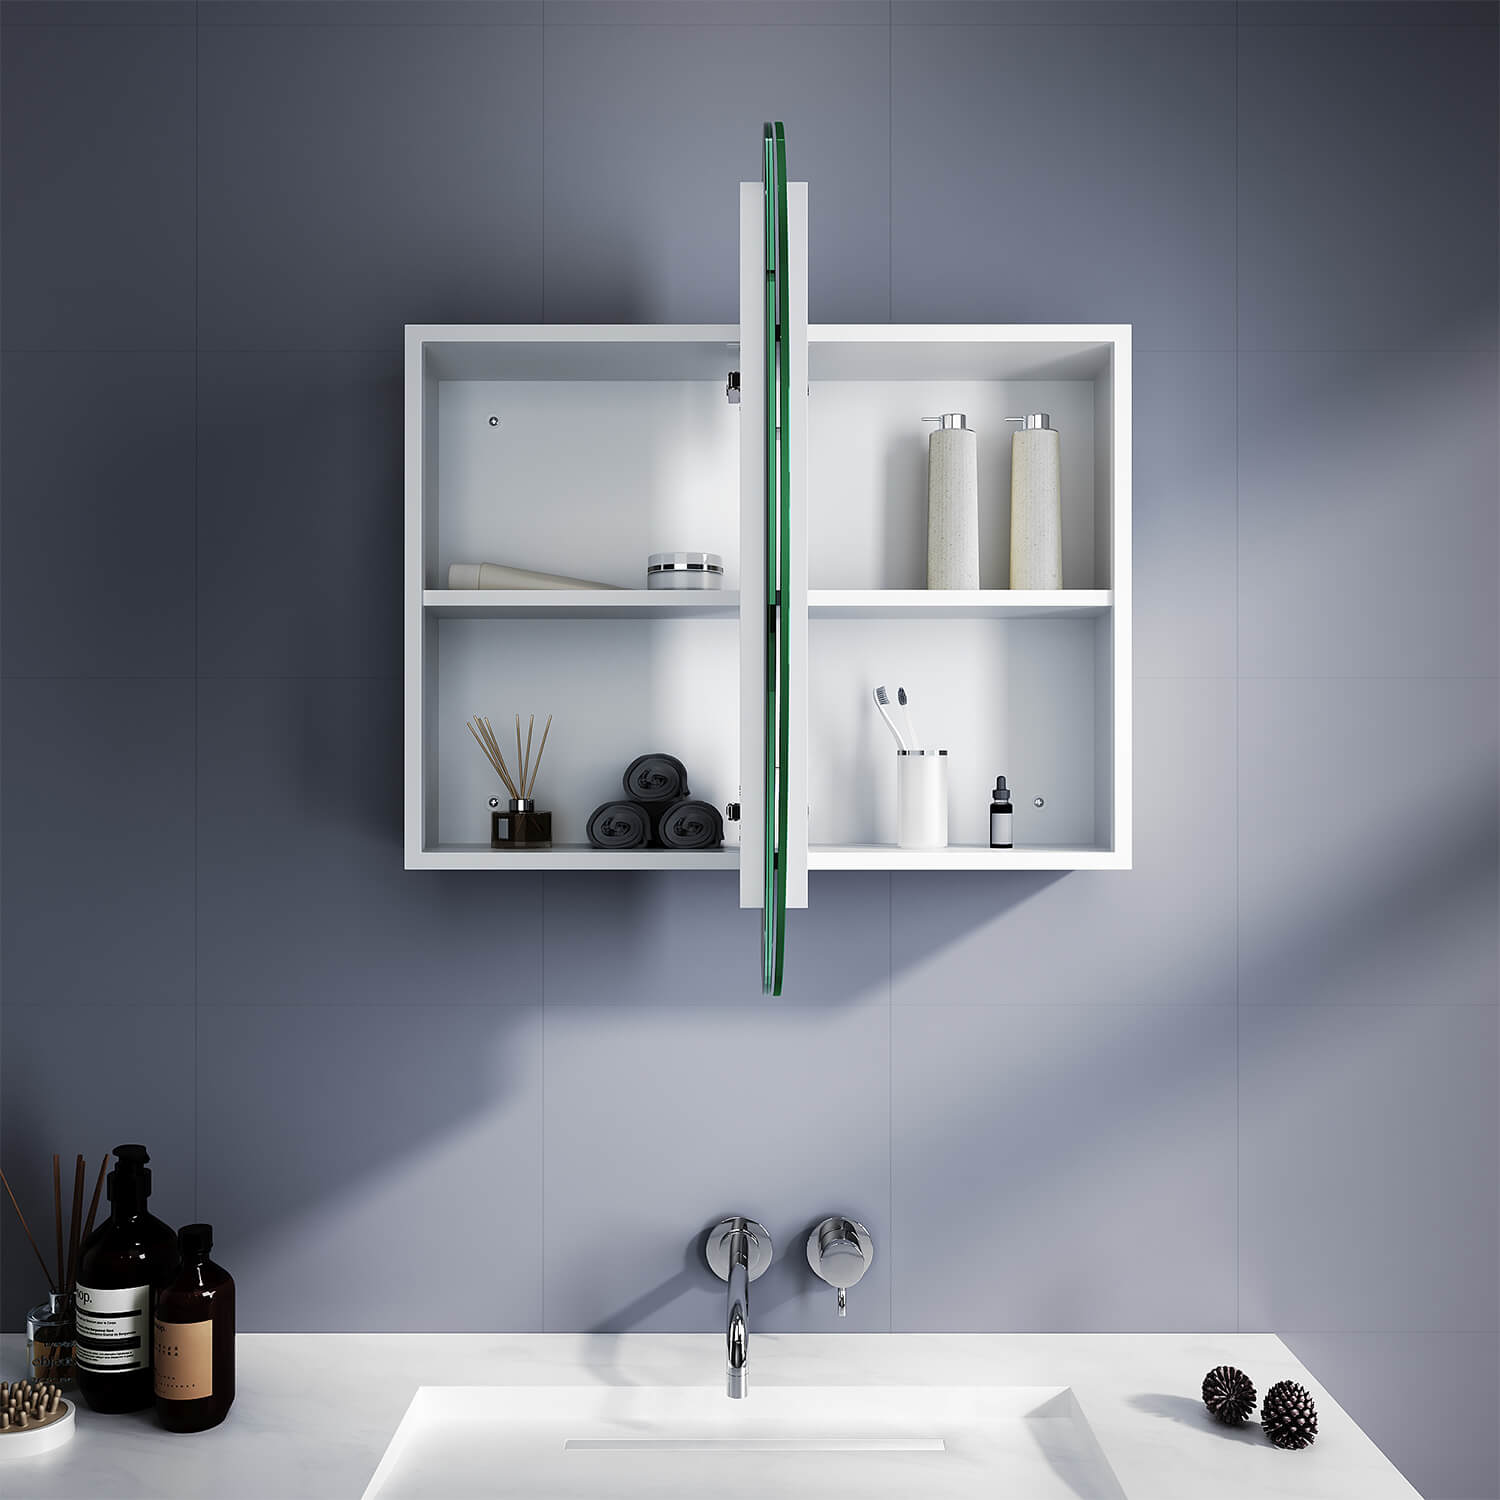 Oval Mirror Cabinet Medicine Shaving Bathroom Wall Hung or In-wall 900x600mm - Elegantshowers